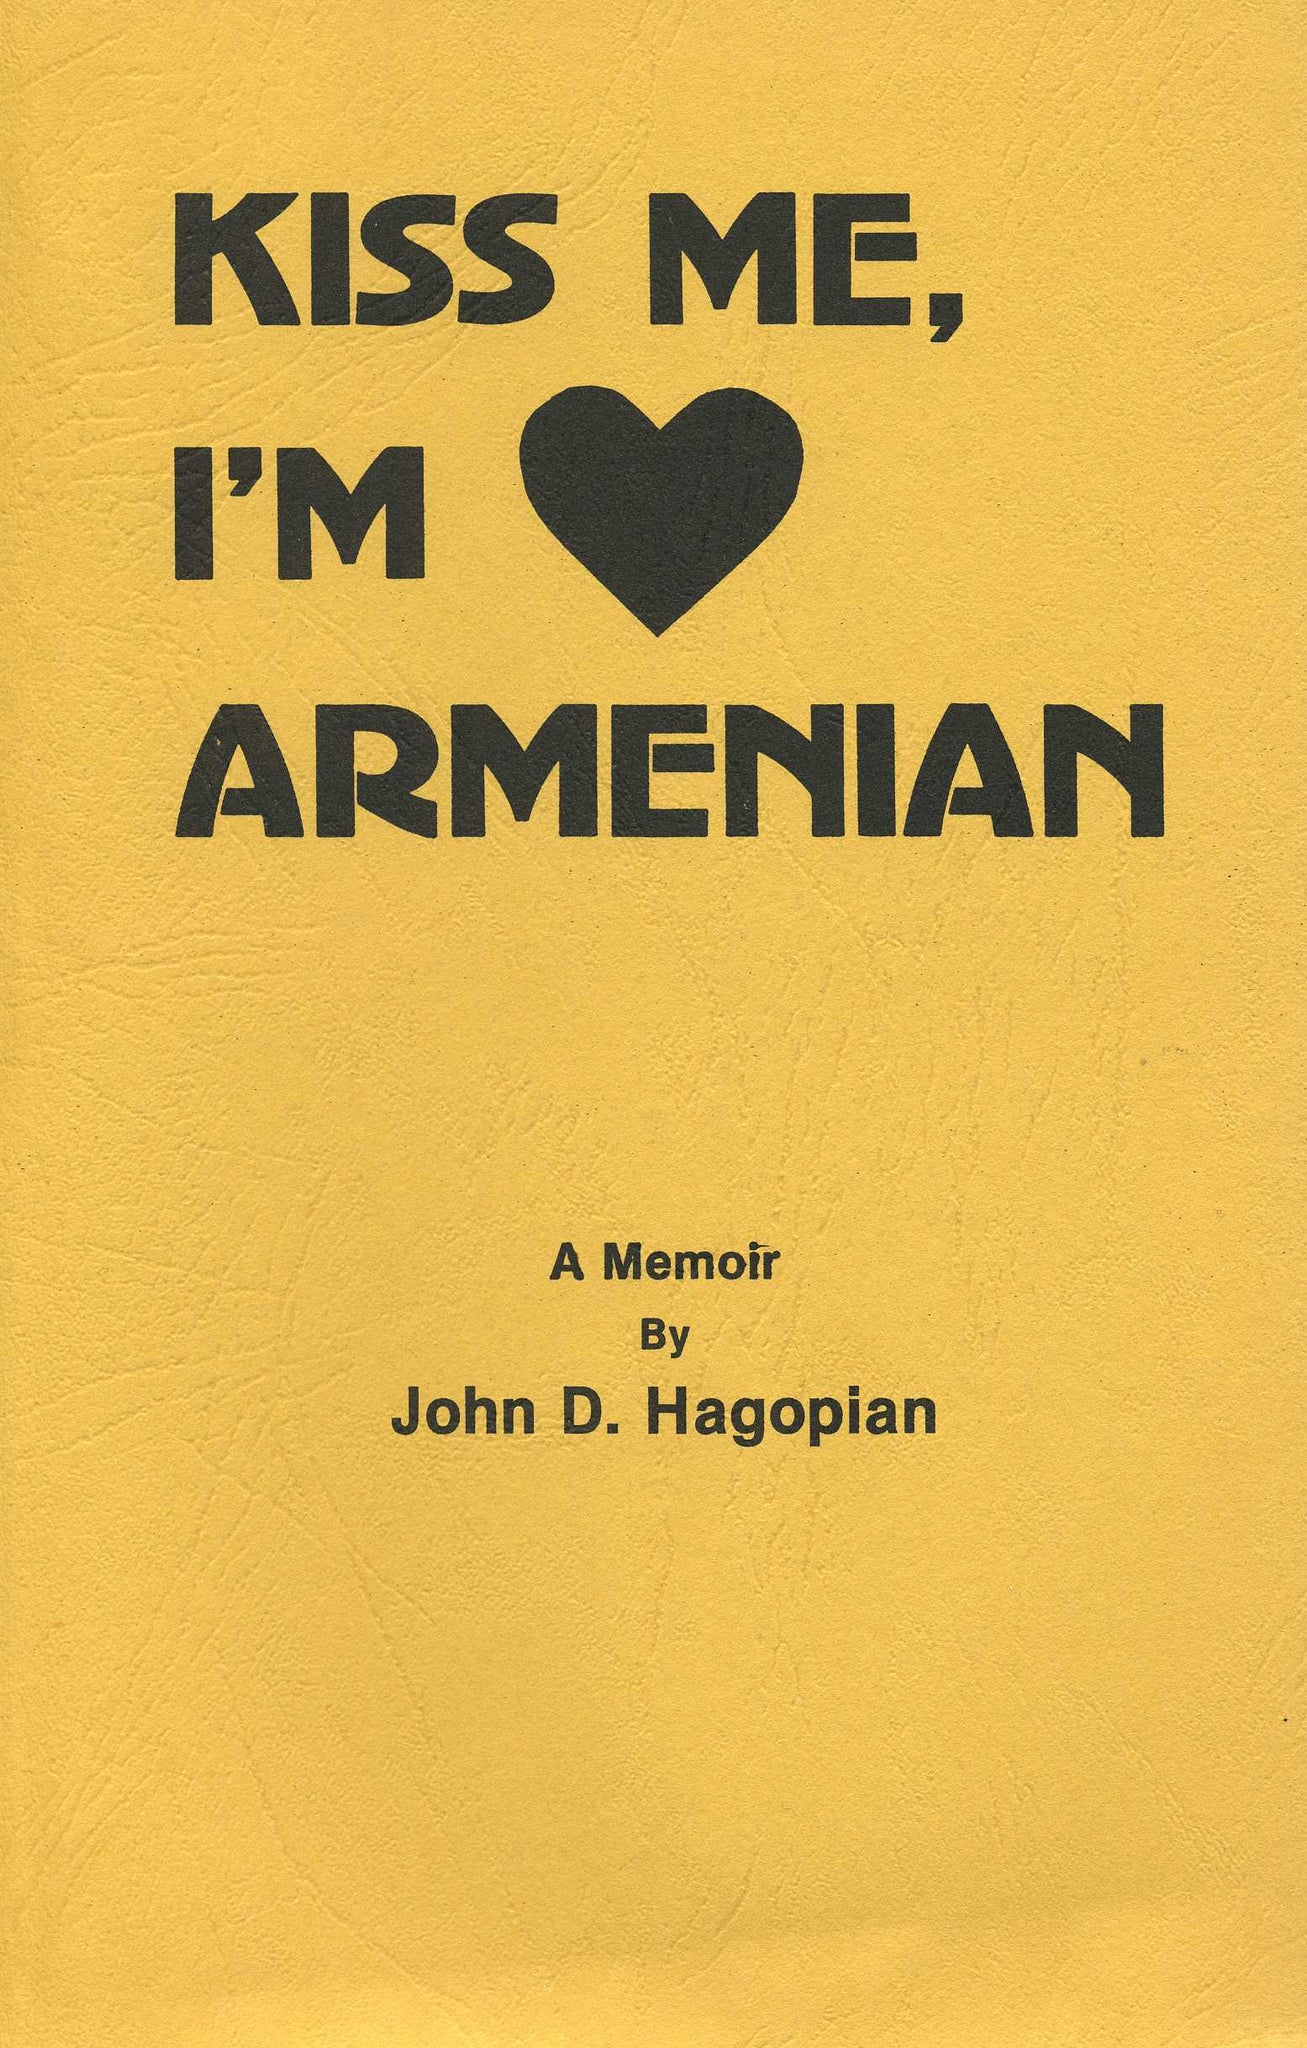 KISS ME, I'M ARMENIAN: A Memoir